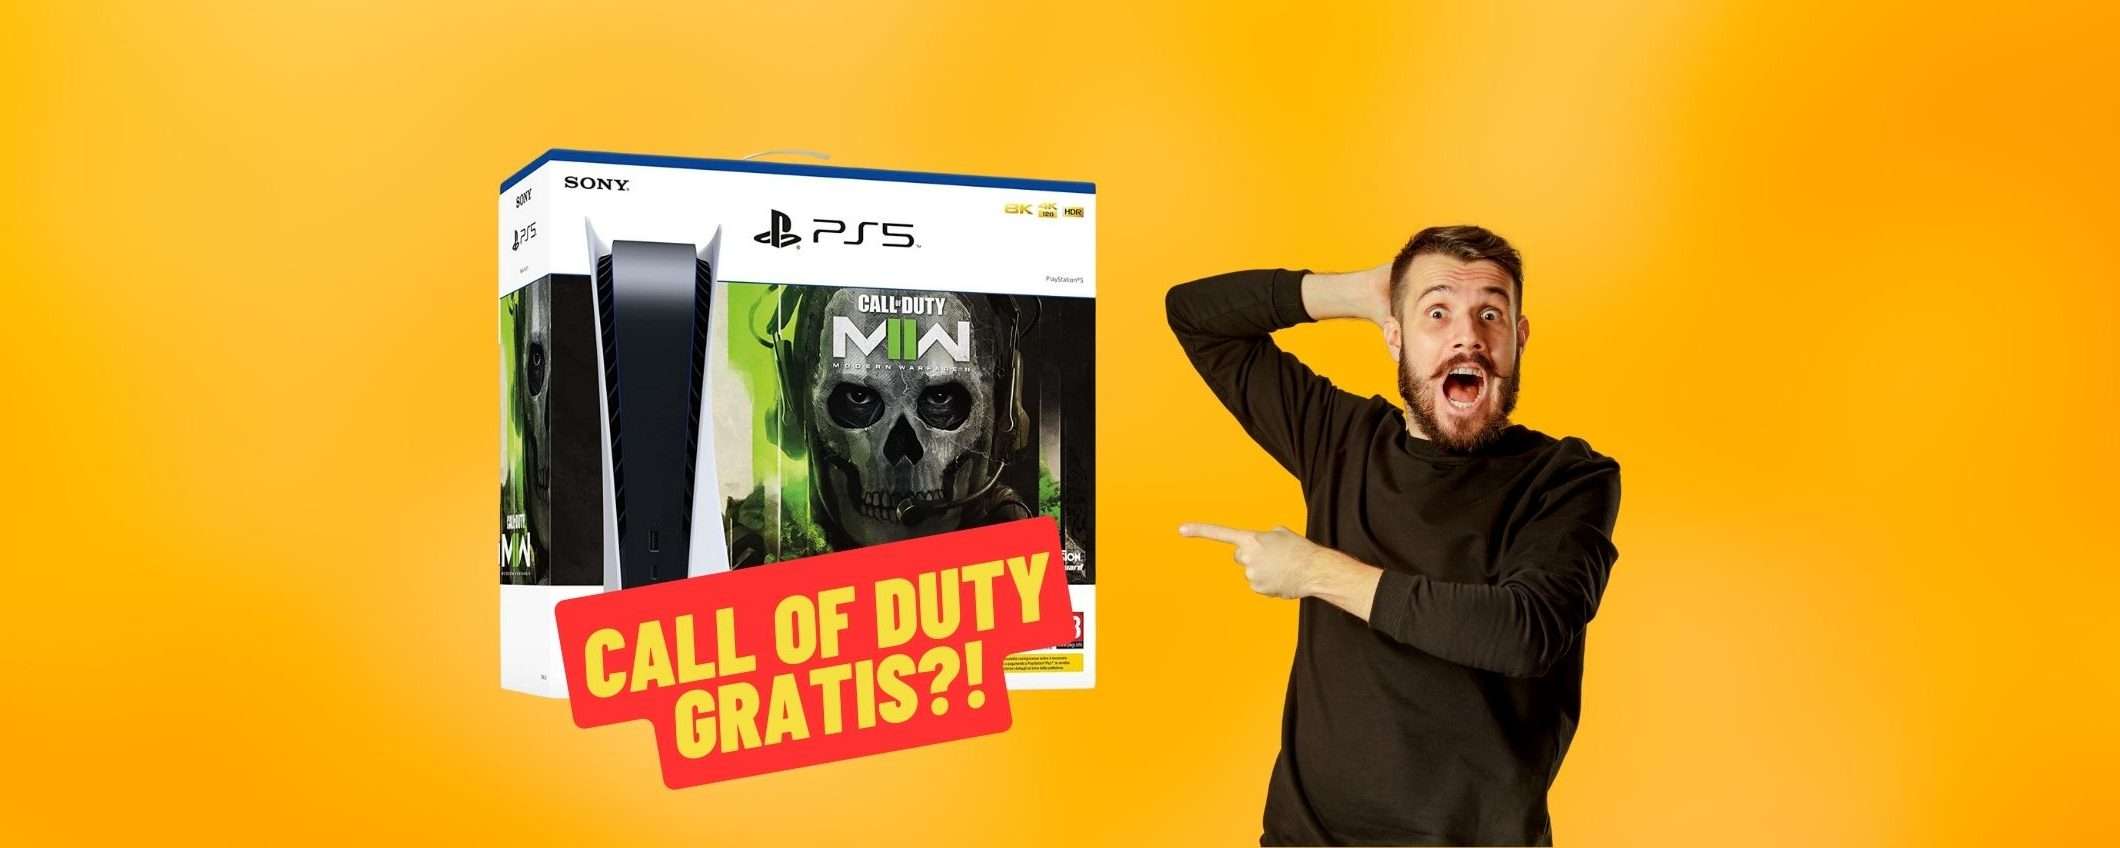 PlayStation 5 con Call of Duty GRATIS: l'incredibile offerta Amazon